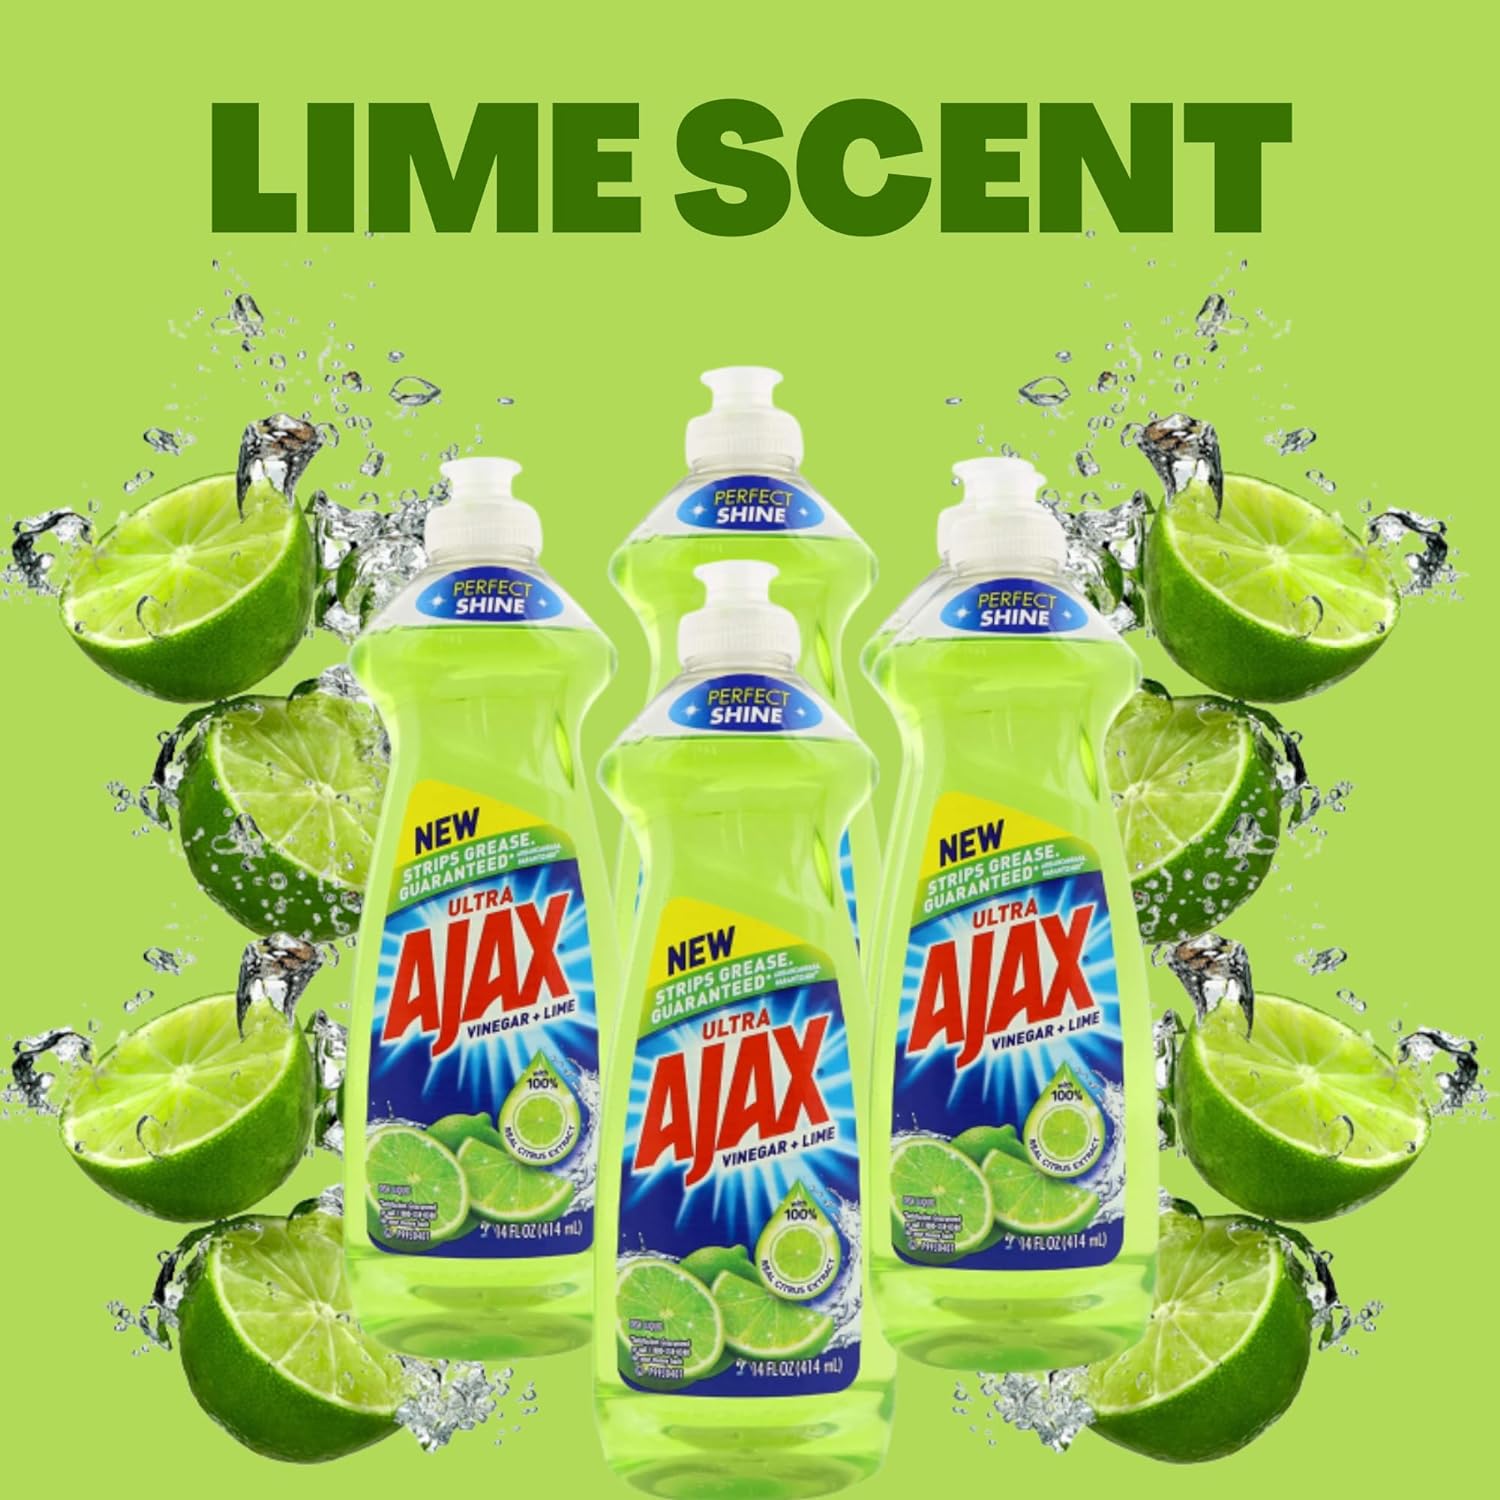 Ajax Dish Soap - Ajax Dishwashing Liquid Super Degreaser 14 FL OZ (Lemon, Orange, Lime) (Variety Pack of 3) 1 of Each - Includes Clean is Better Card : Health & Household